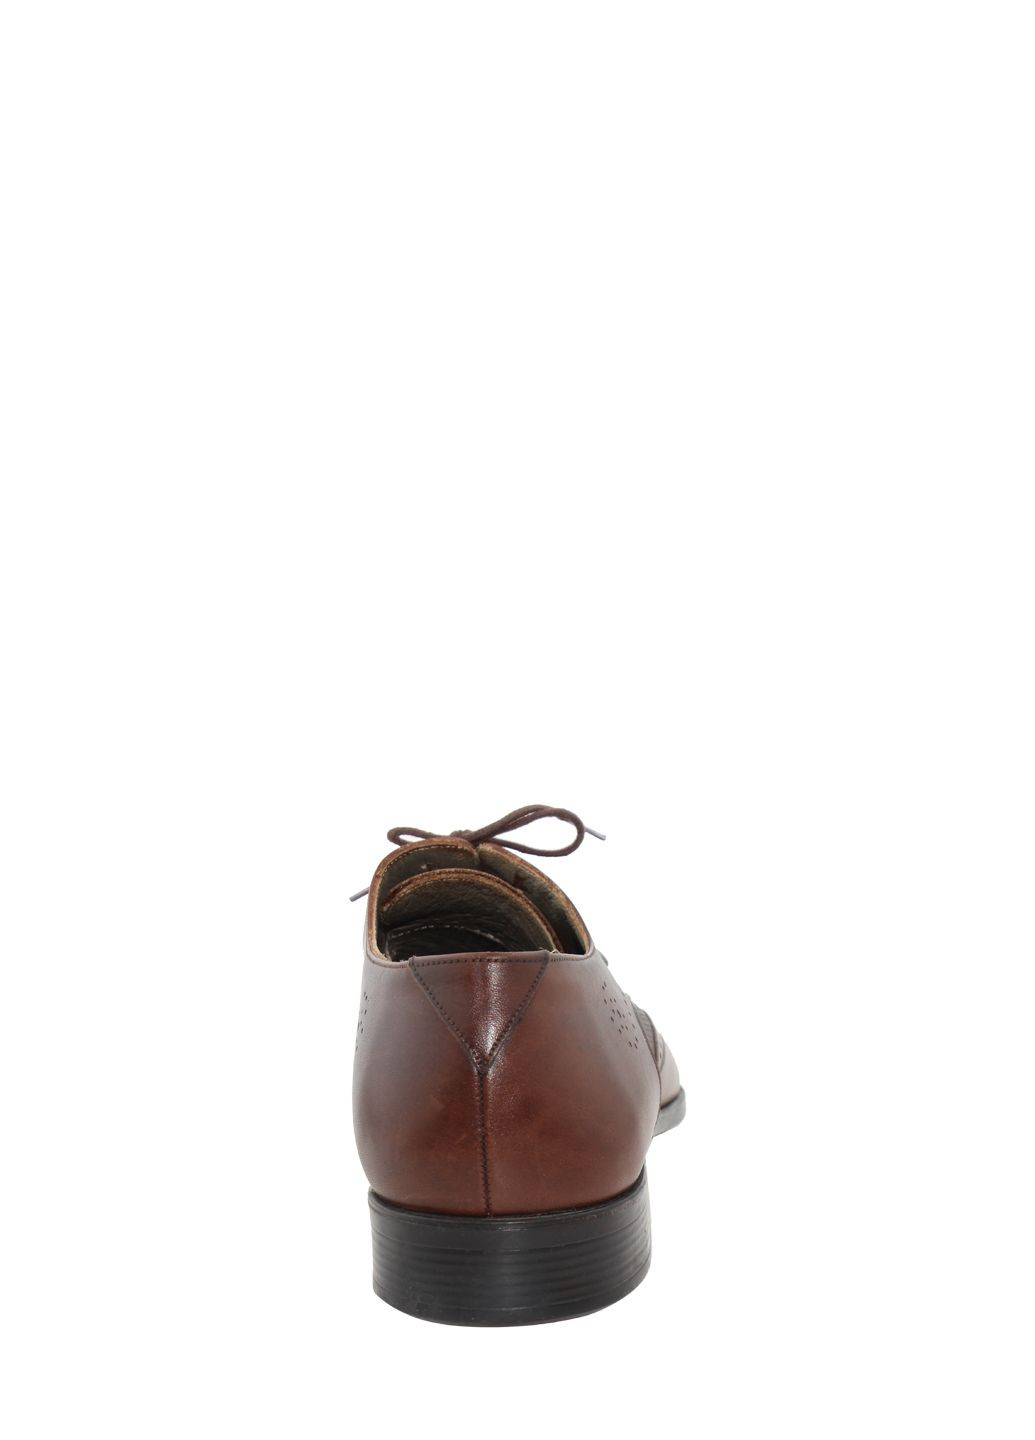 Коричневые туфли 211-1 коричневый Rabano